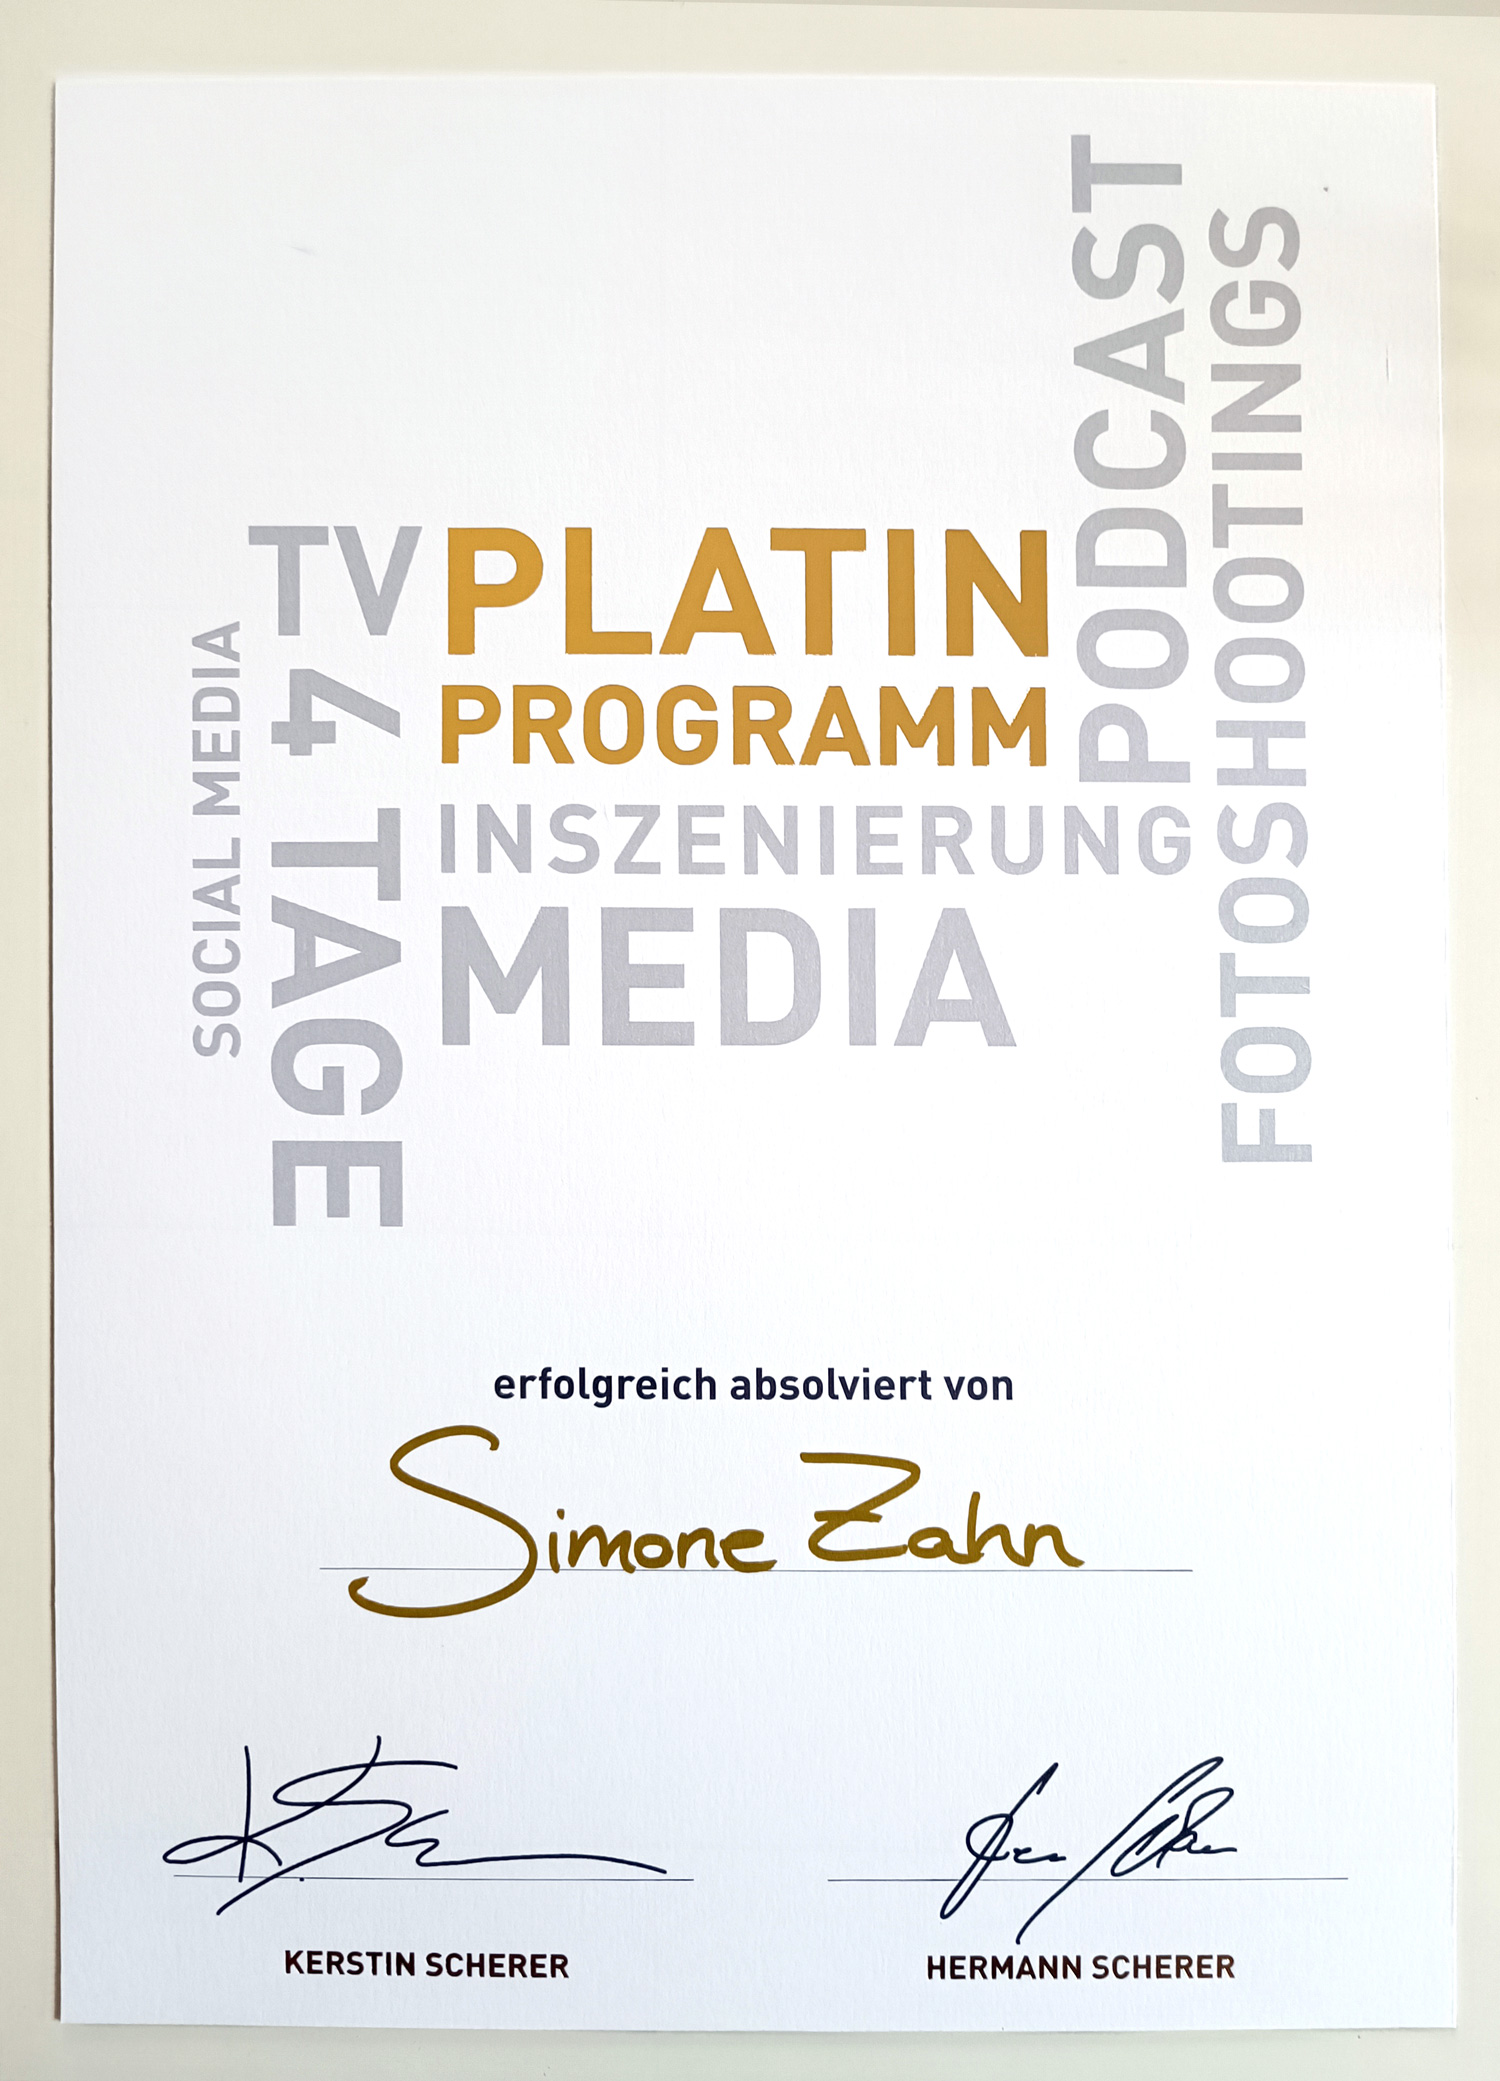 Platin Programm Inszenierungs Media Award.